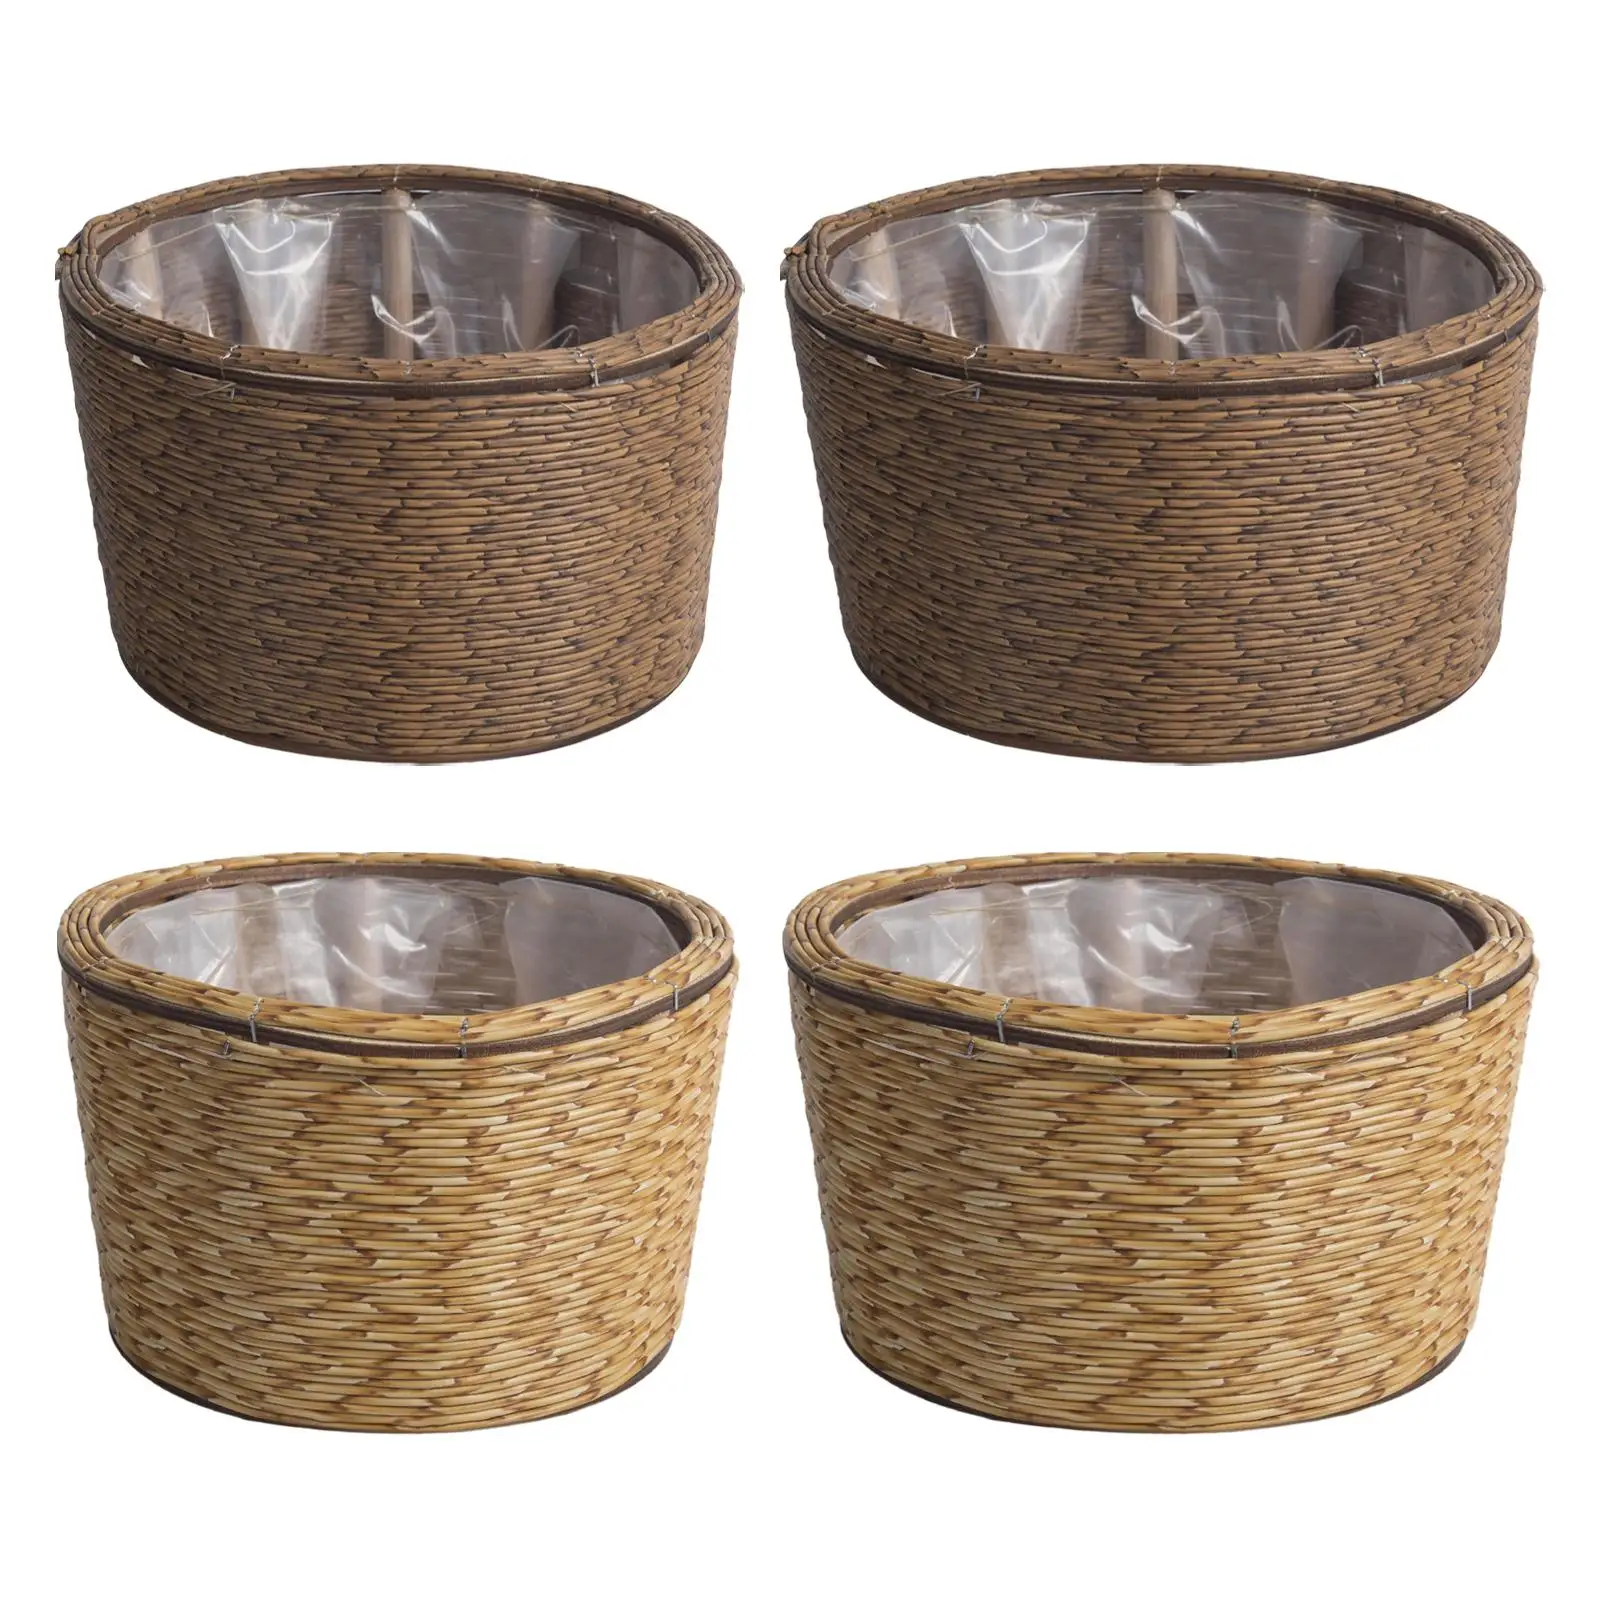 Flower Pots with Waterproof Liner Laundry Bag Plant Pot Storage Basket Flower Basket for Outdoor Party Indoor Garage Picnic